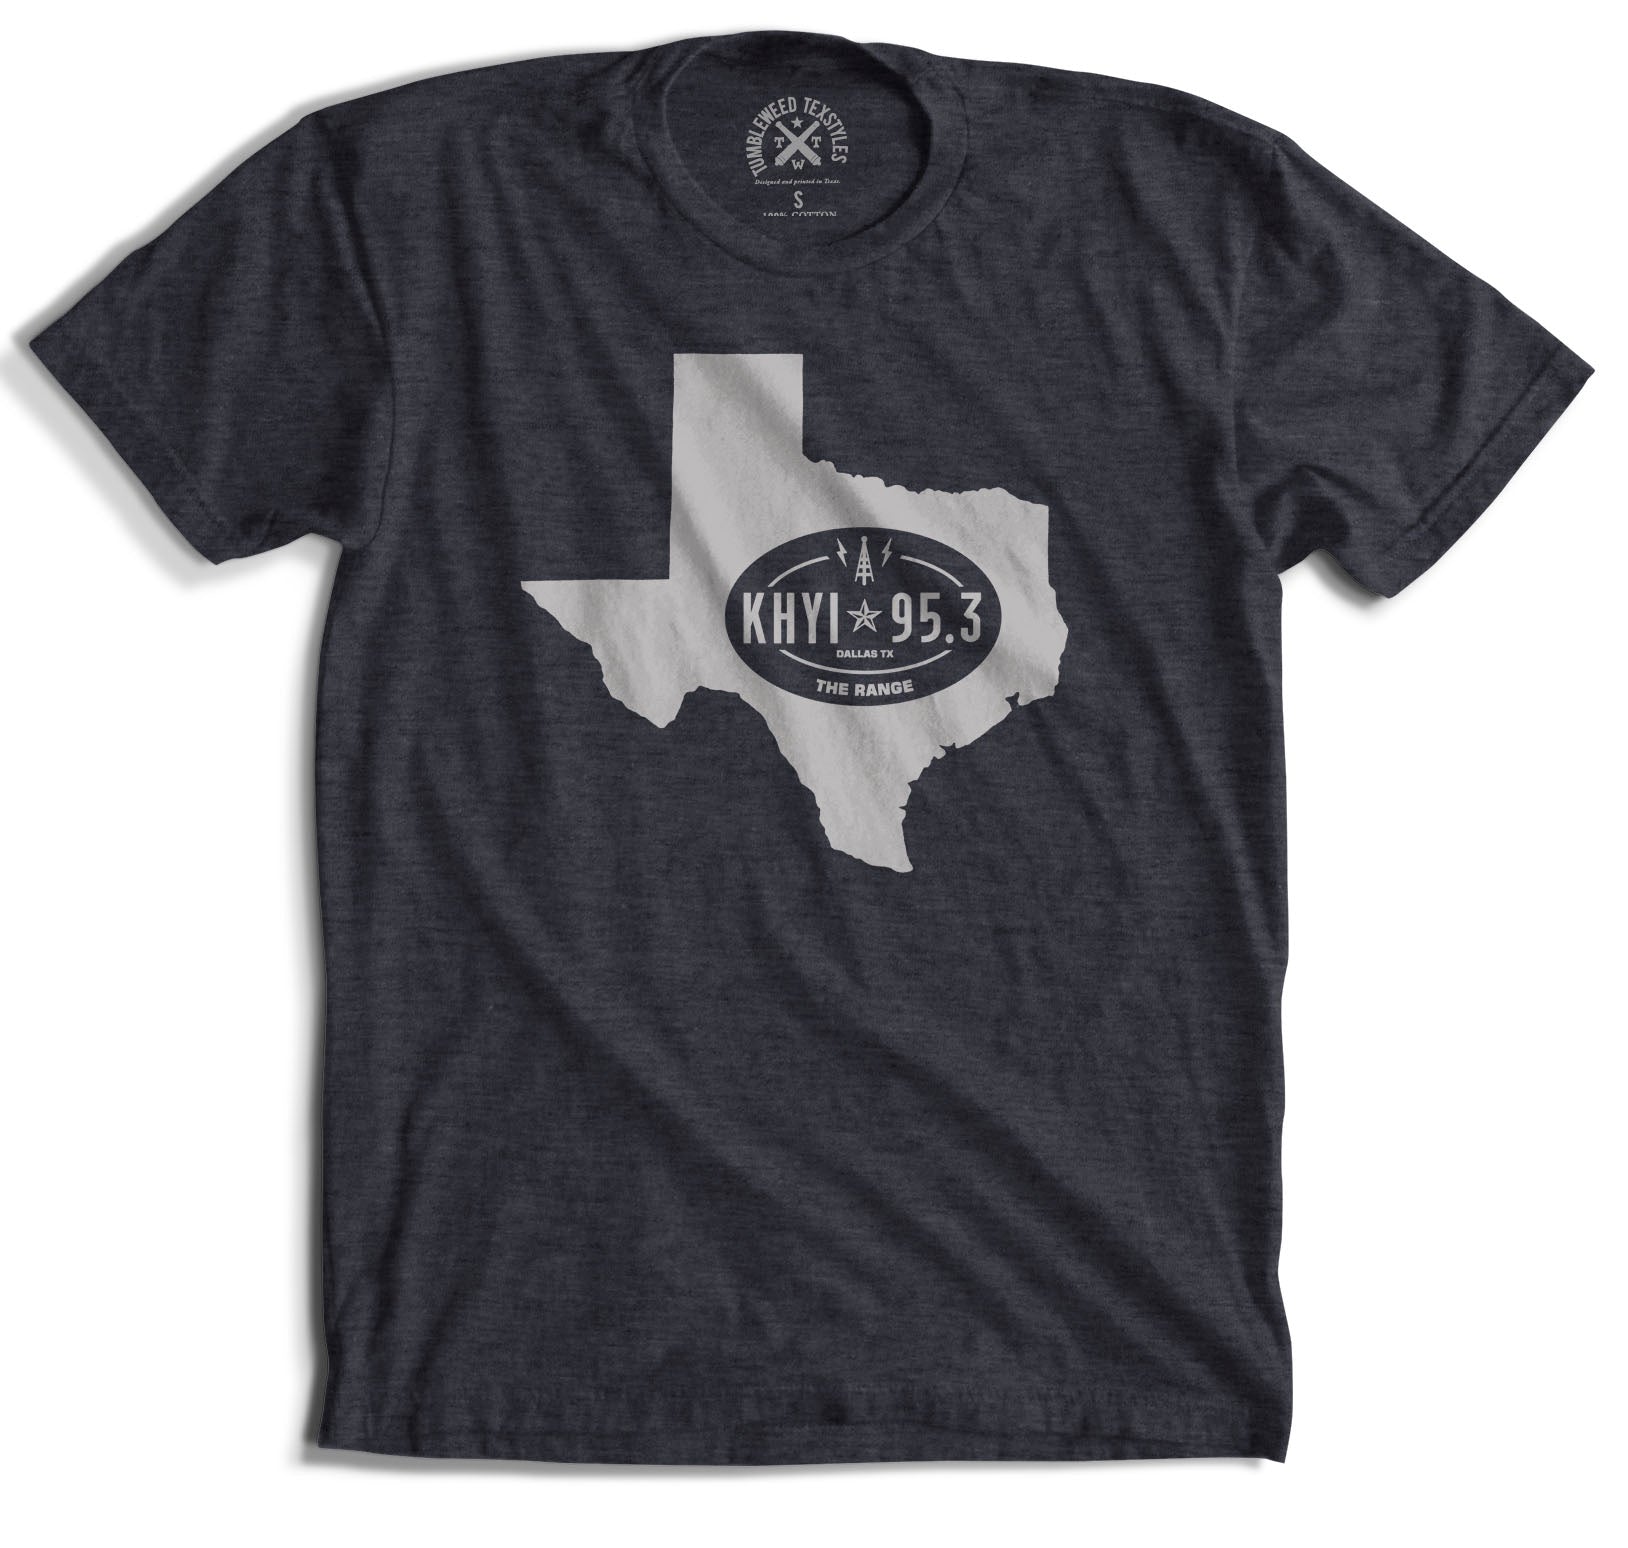 95.3 KHYI "The Range" Oval Logo Texas Navy T-Shirt